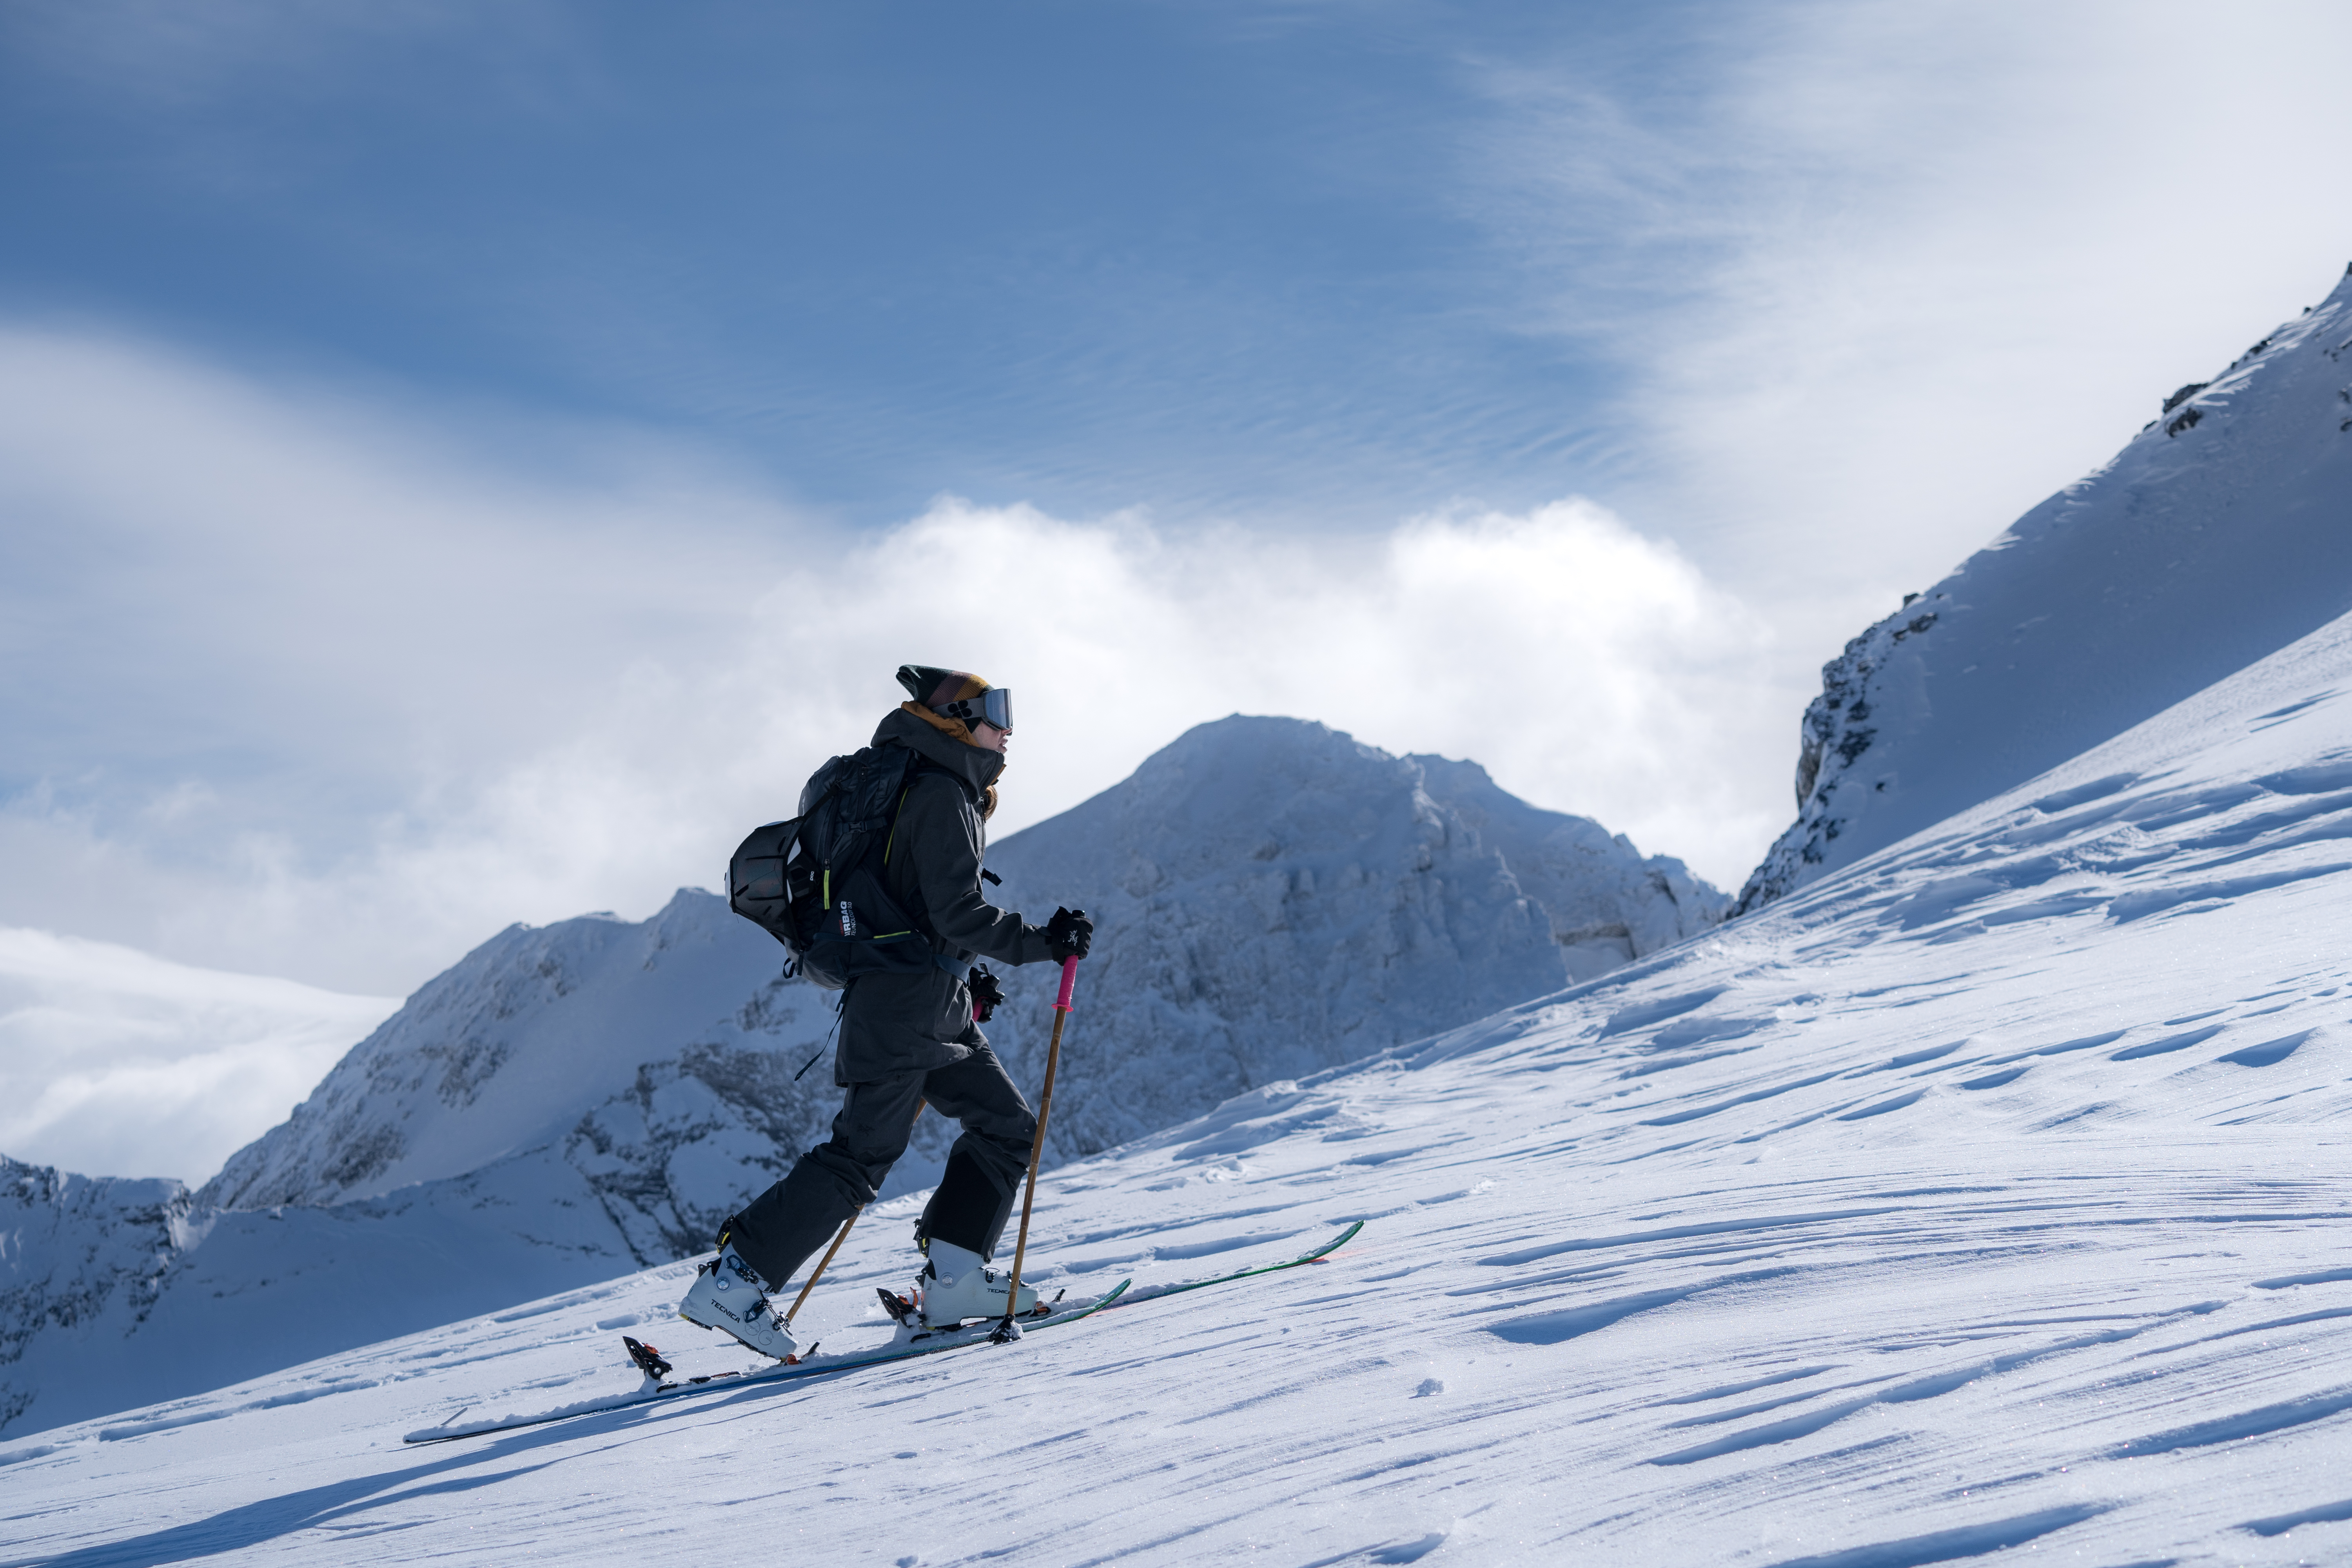 Protect our winters athlete ski touring